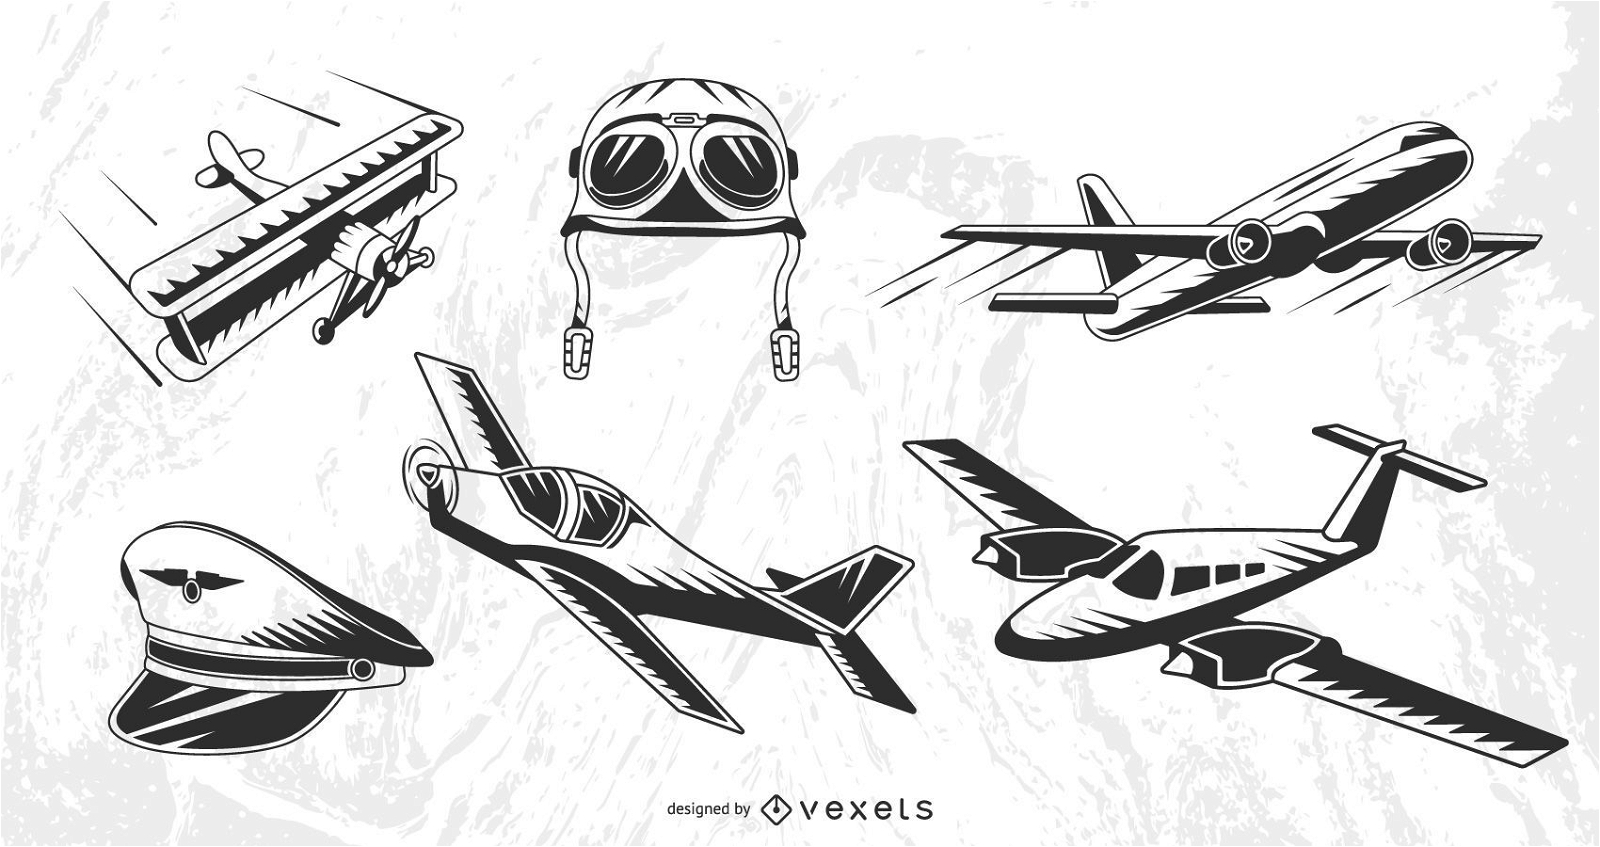 Vintage Flugzeuge eingestellt